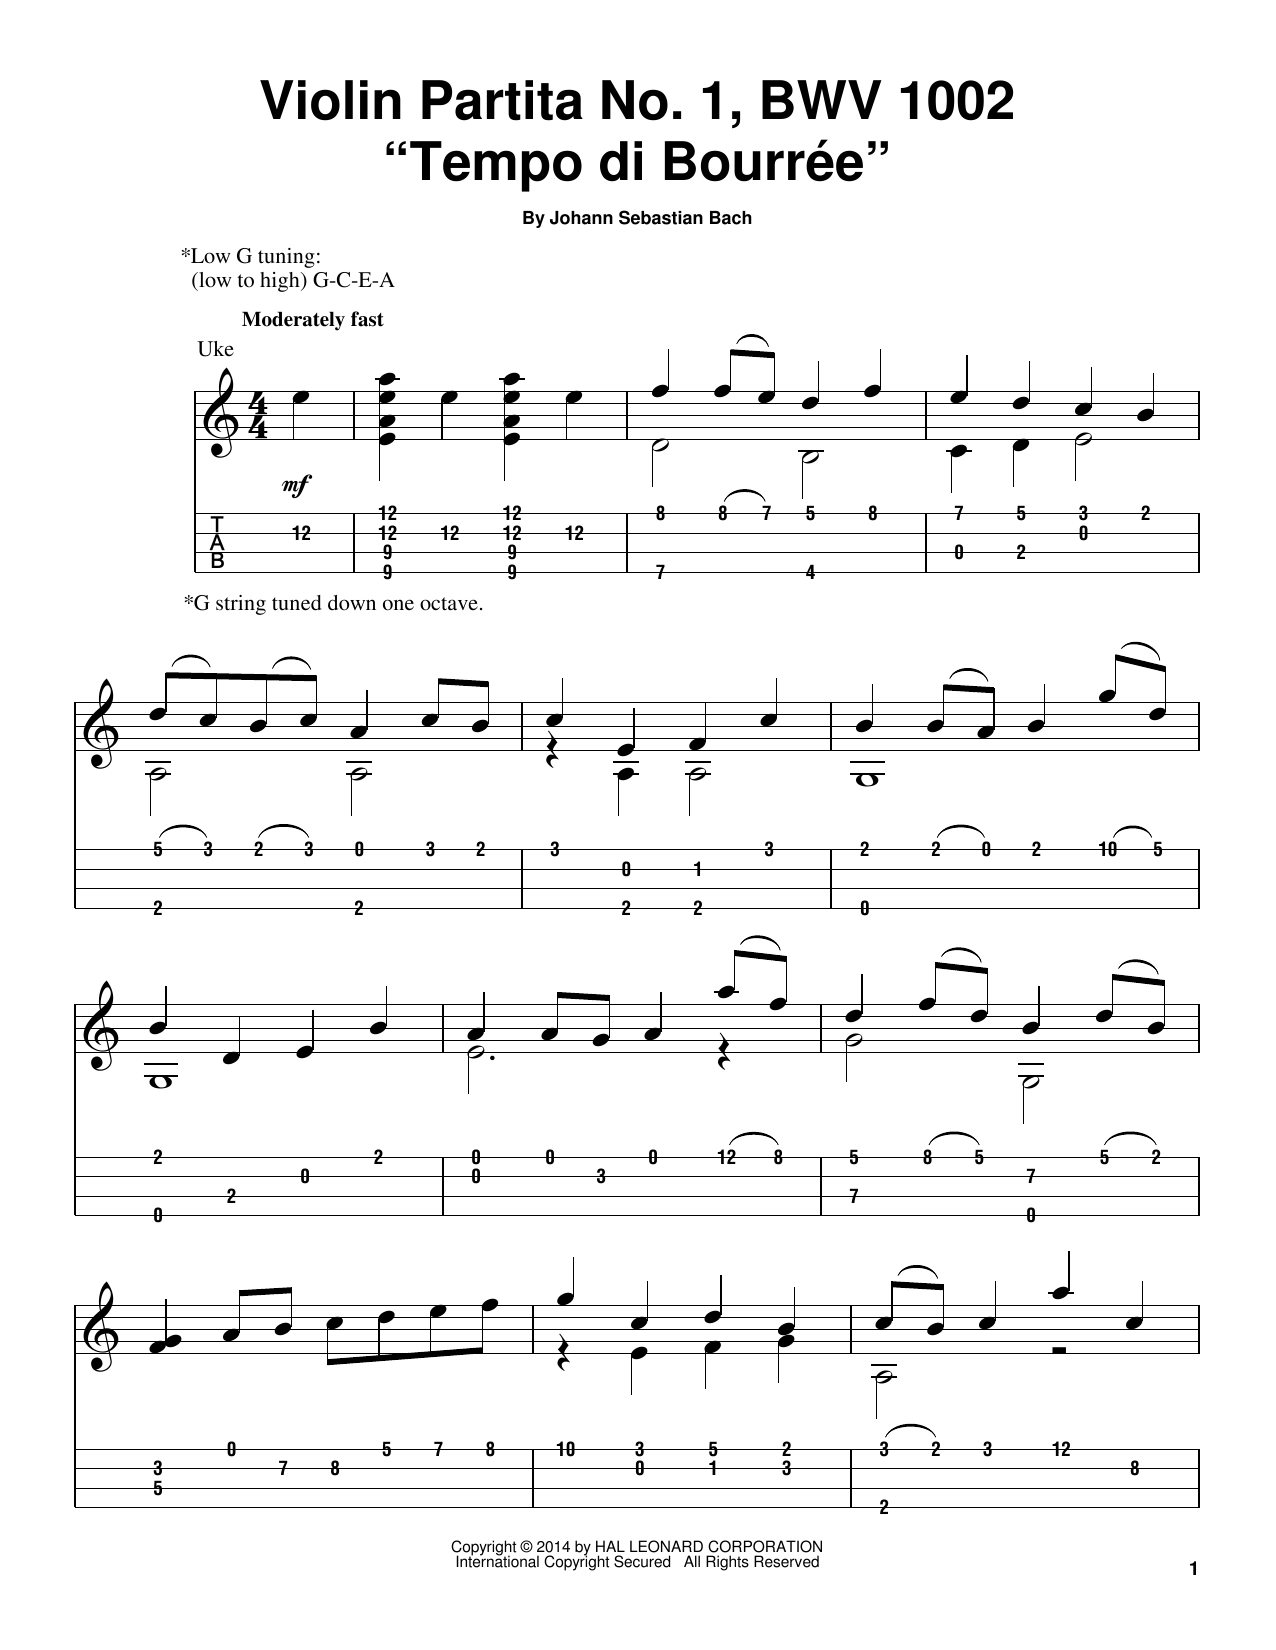 Johann Sebastian Bach Tempo Di Bourree, BWV 1002 Sheet Music Notes & Chords for Ukulele - Download or Print PDF